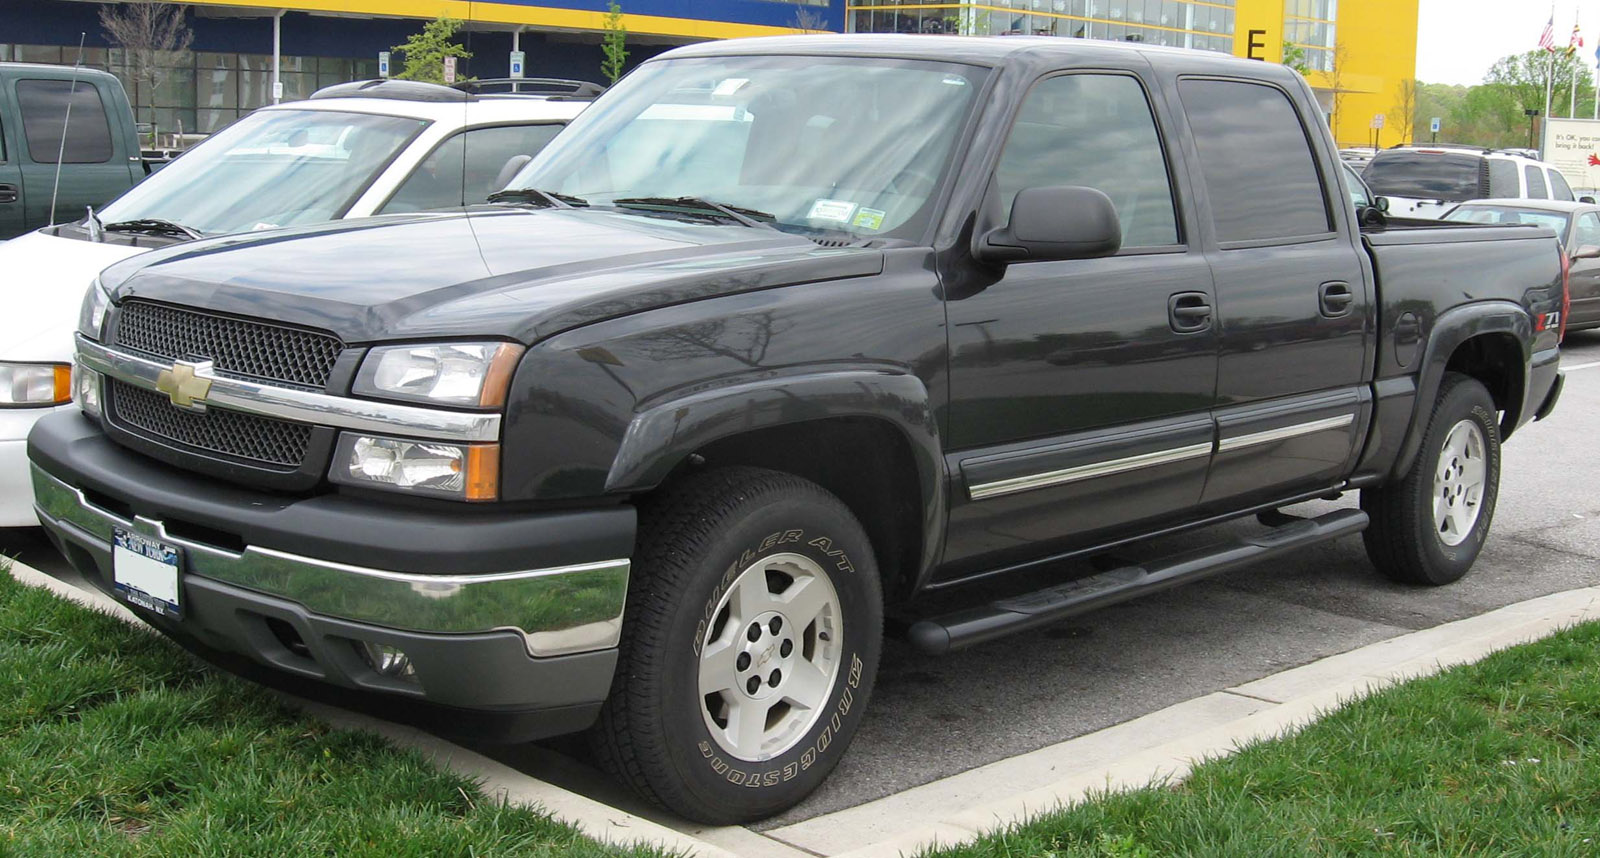 2004 Chevrolet pickup (full-size)
(Courtesy IFCAR via Wikimedia Commons)